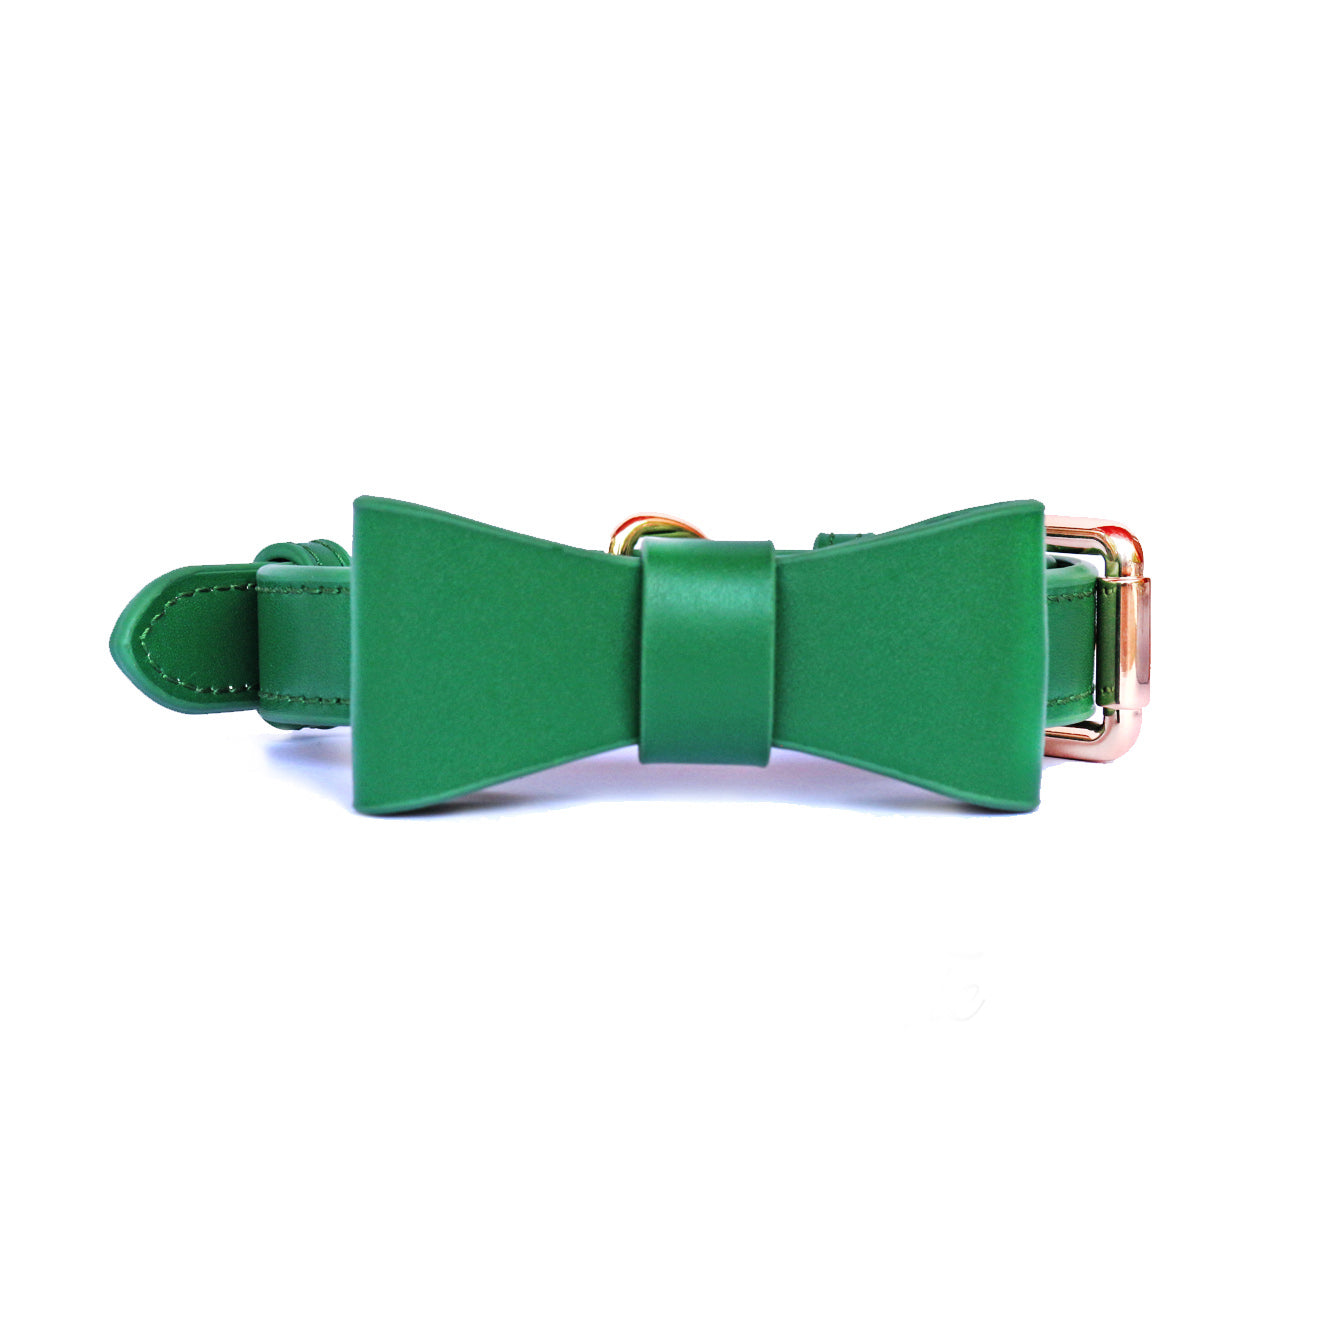 luxury dog collar australia with bow tie leather dog collar green small dog collar